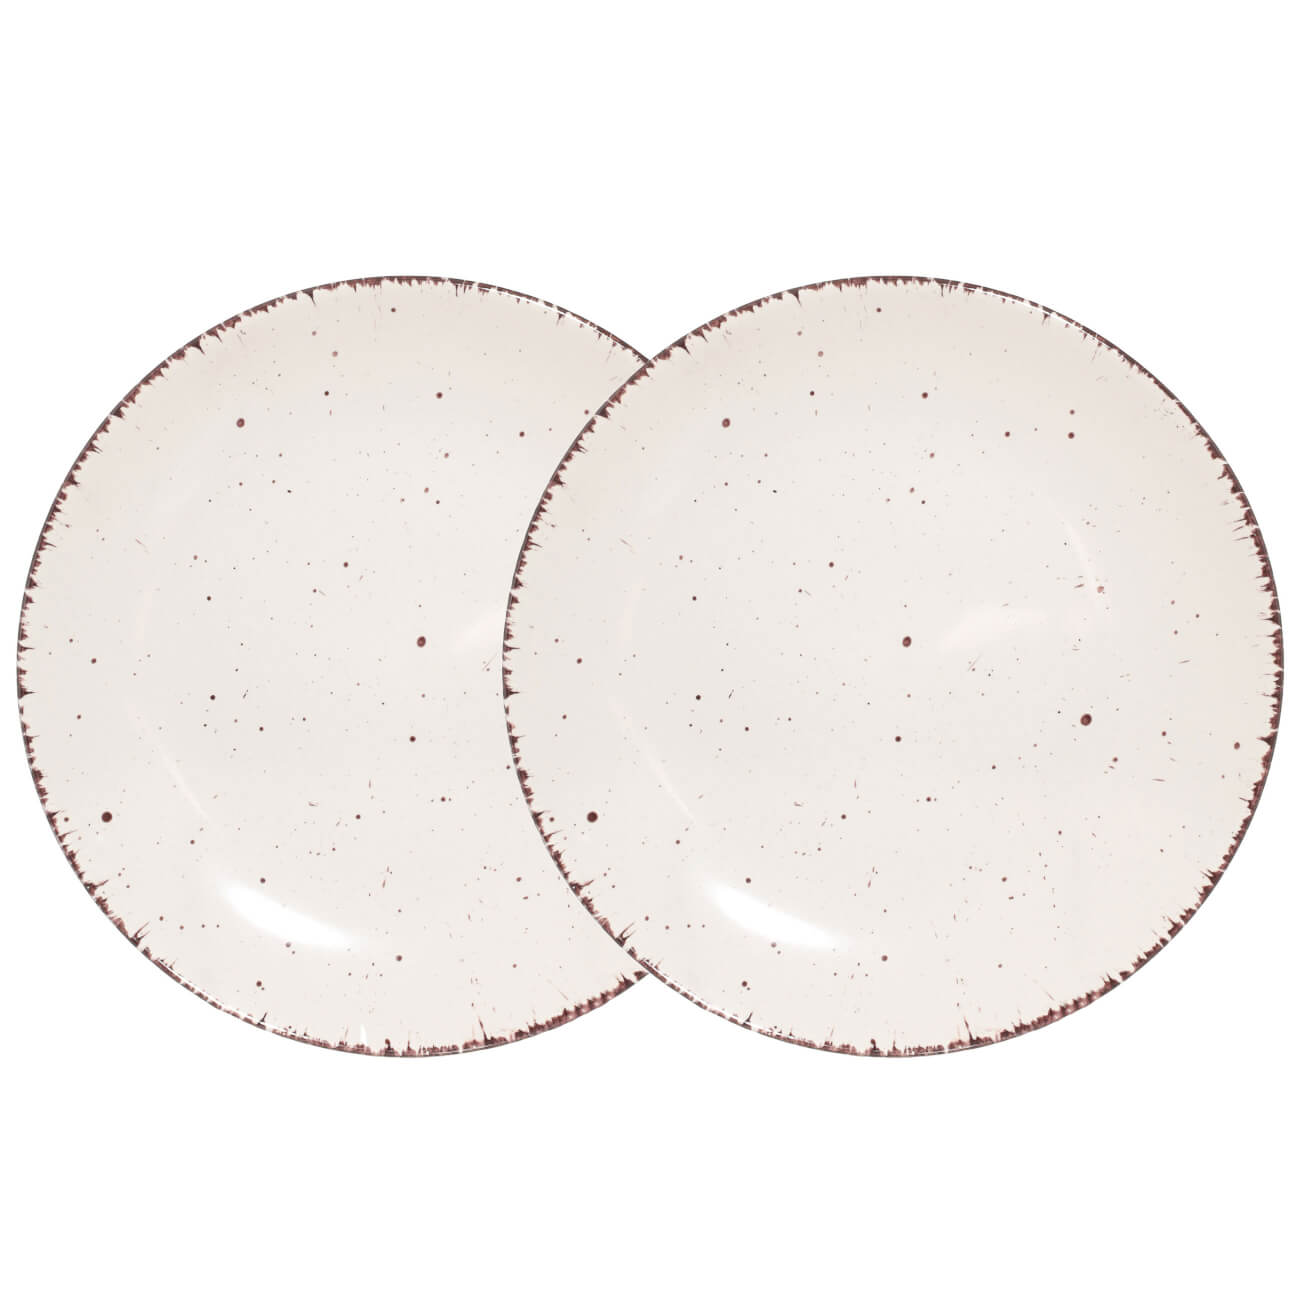 Тарелка закусочная, 21 см, 2 шт, керамика, бежевая, в крапинку, Speckled тарелка закусочная maxwell